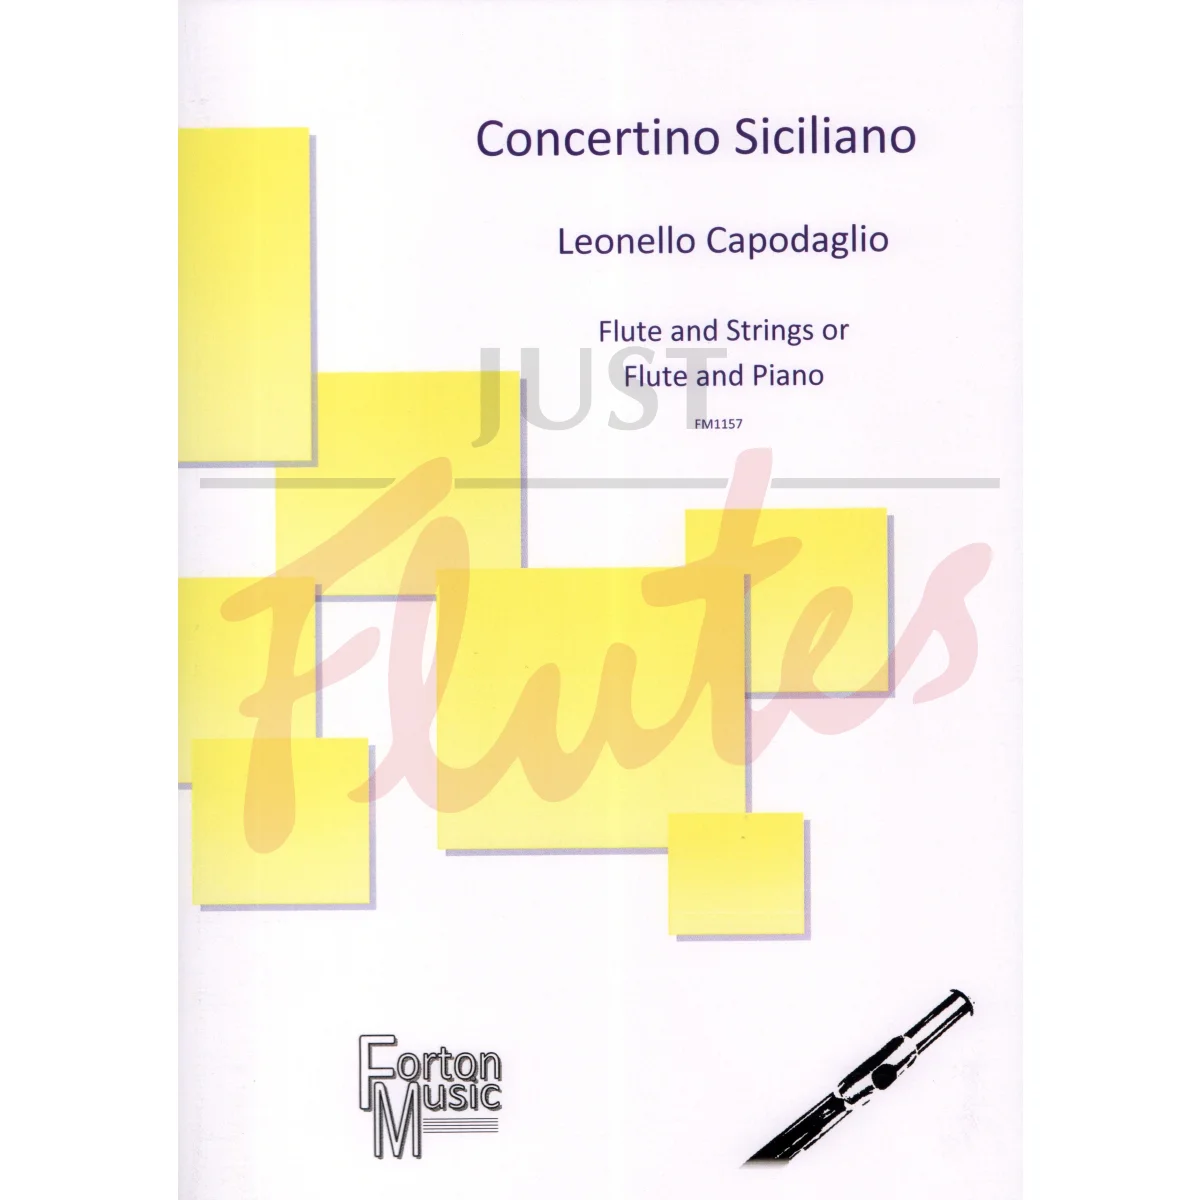 Concertino Siciliano for Flute and String Quintet (Flute and Piano)